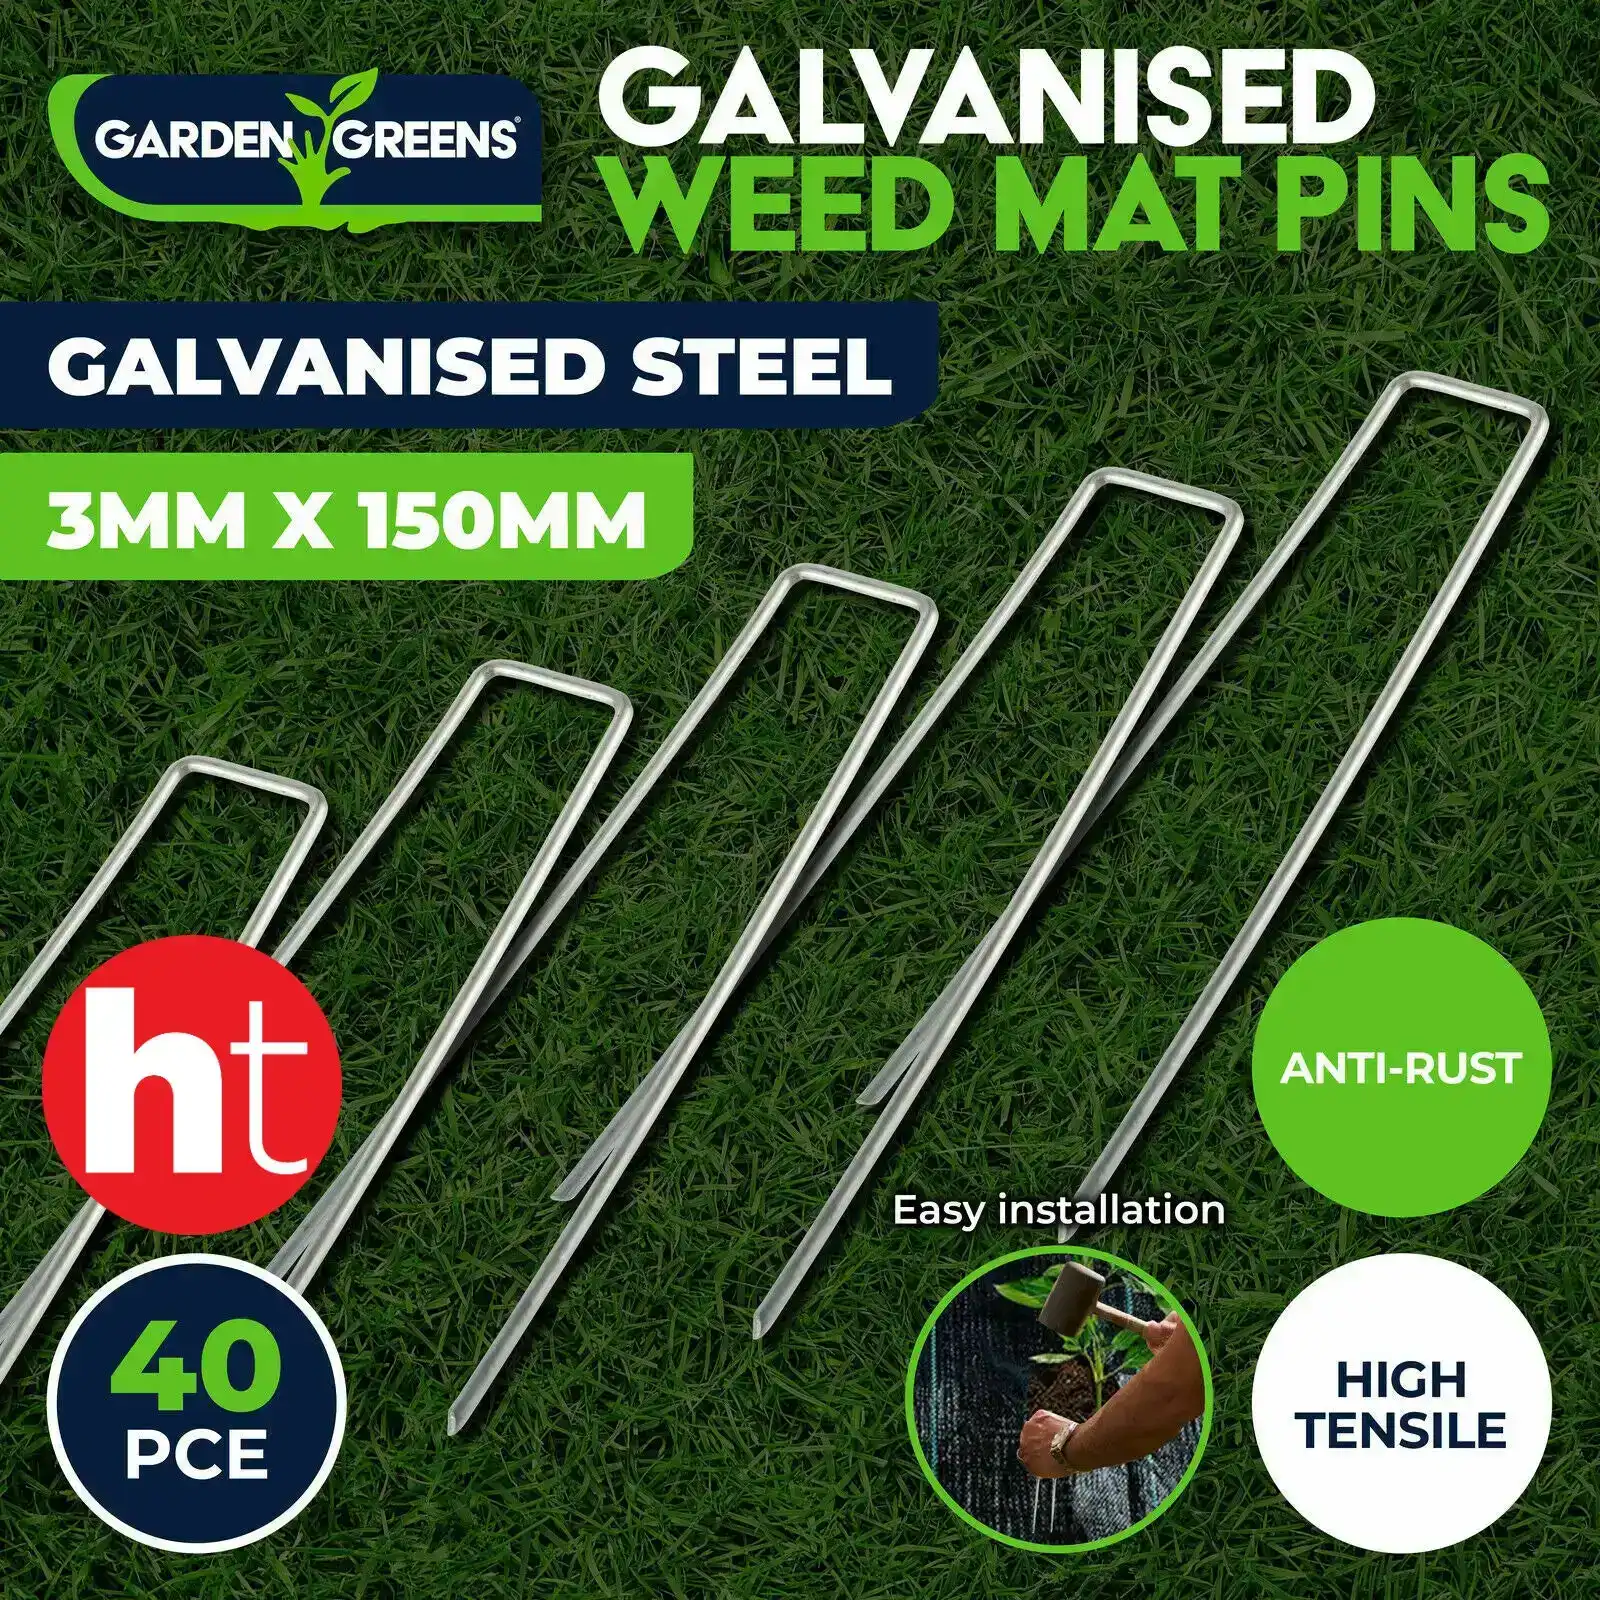 Garden Greens 40PCE Weed Mat Pins Galvanised Steel Anti Rust 3mm x 150mm